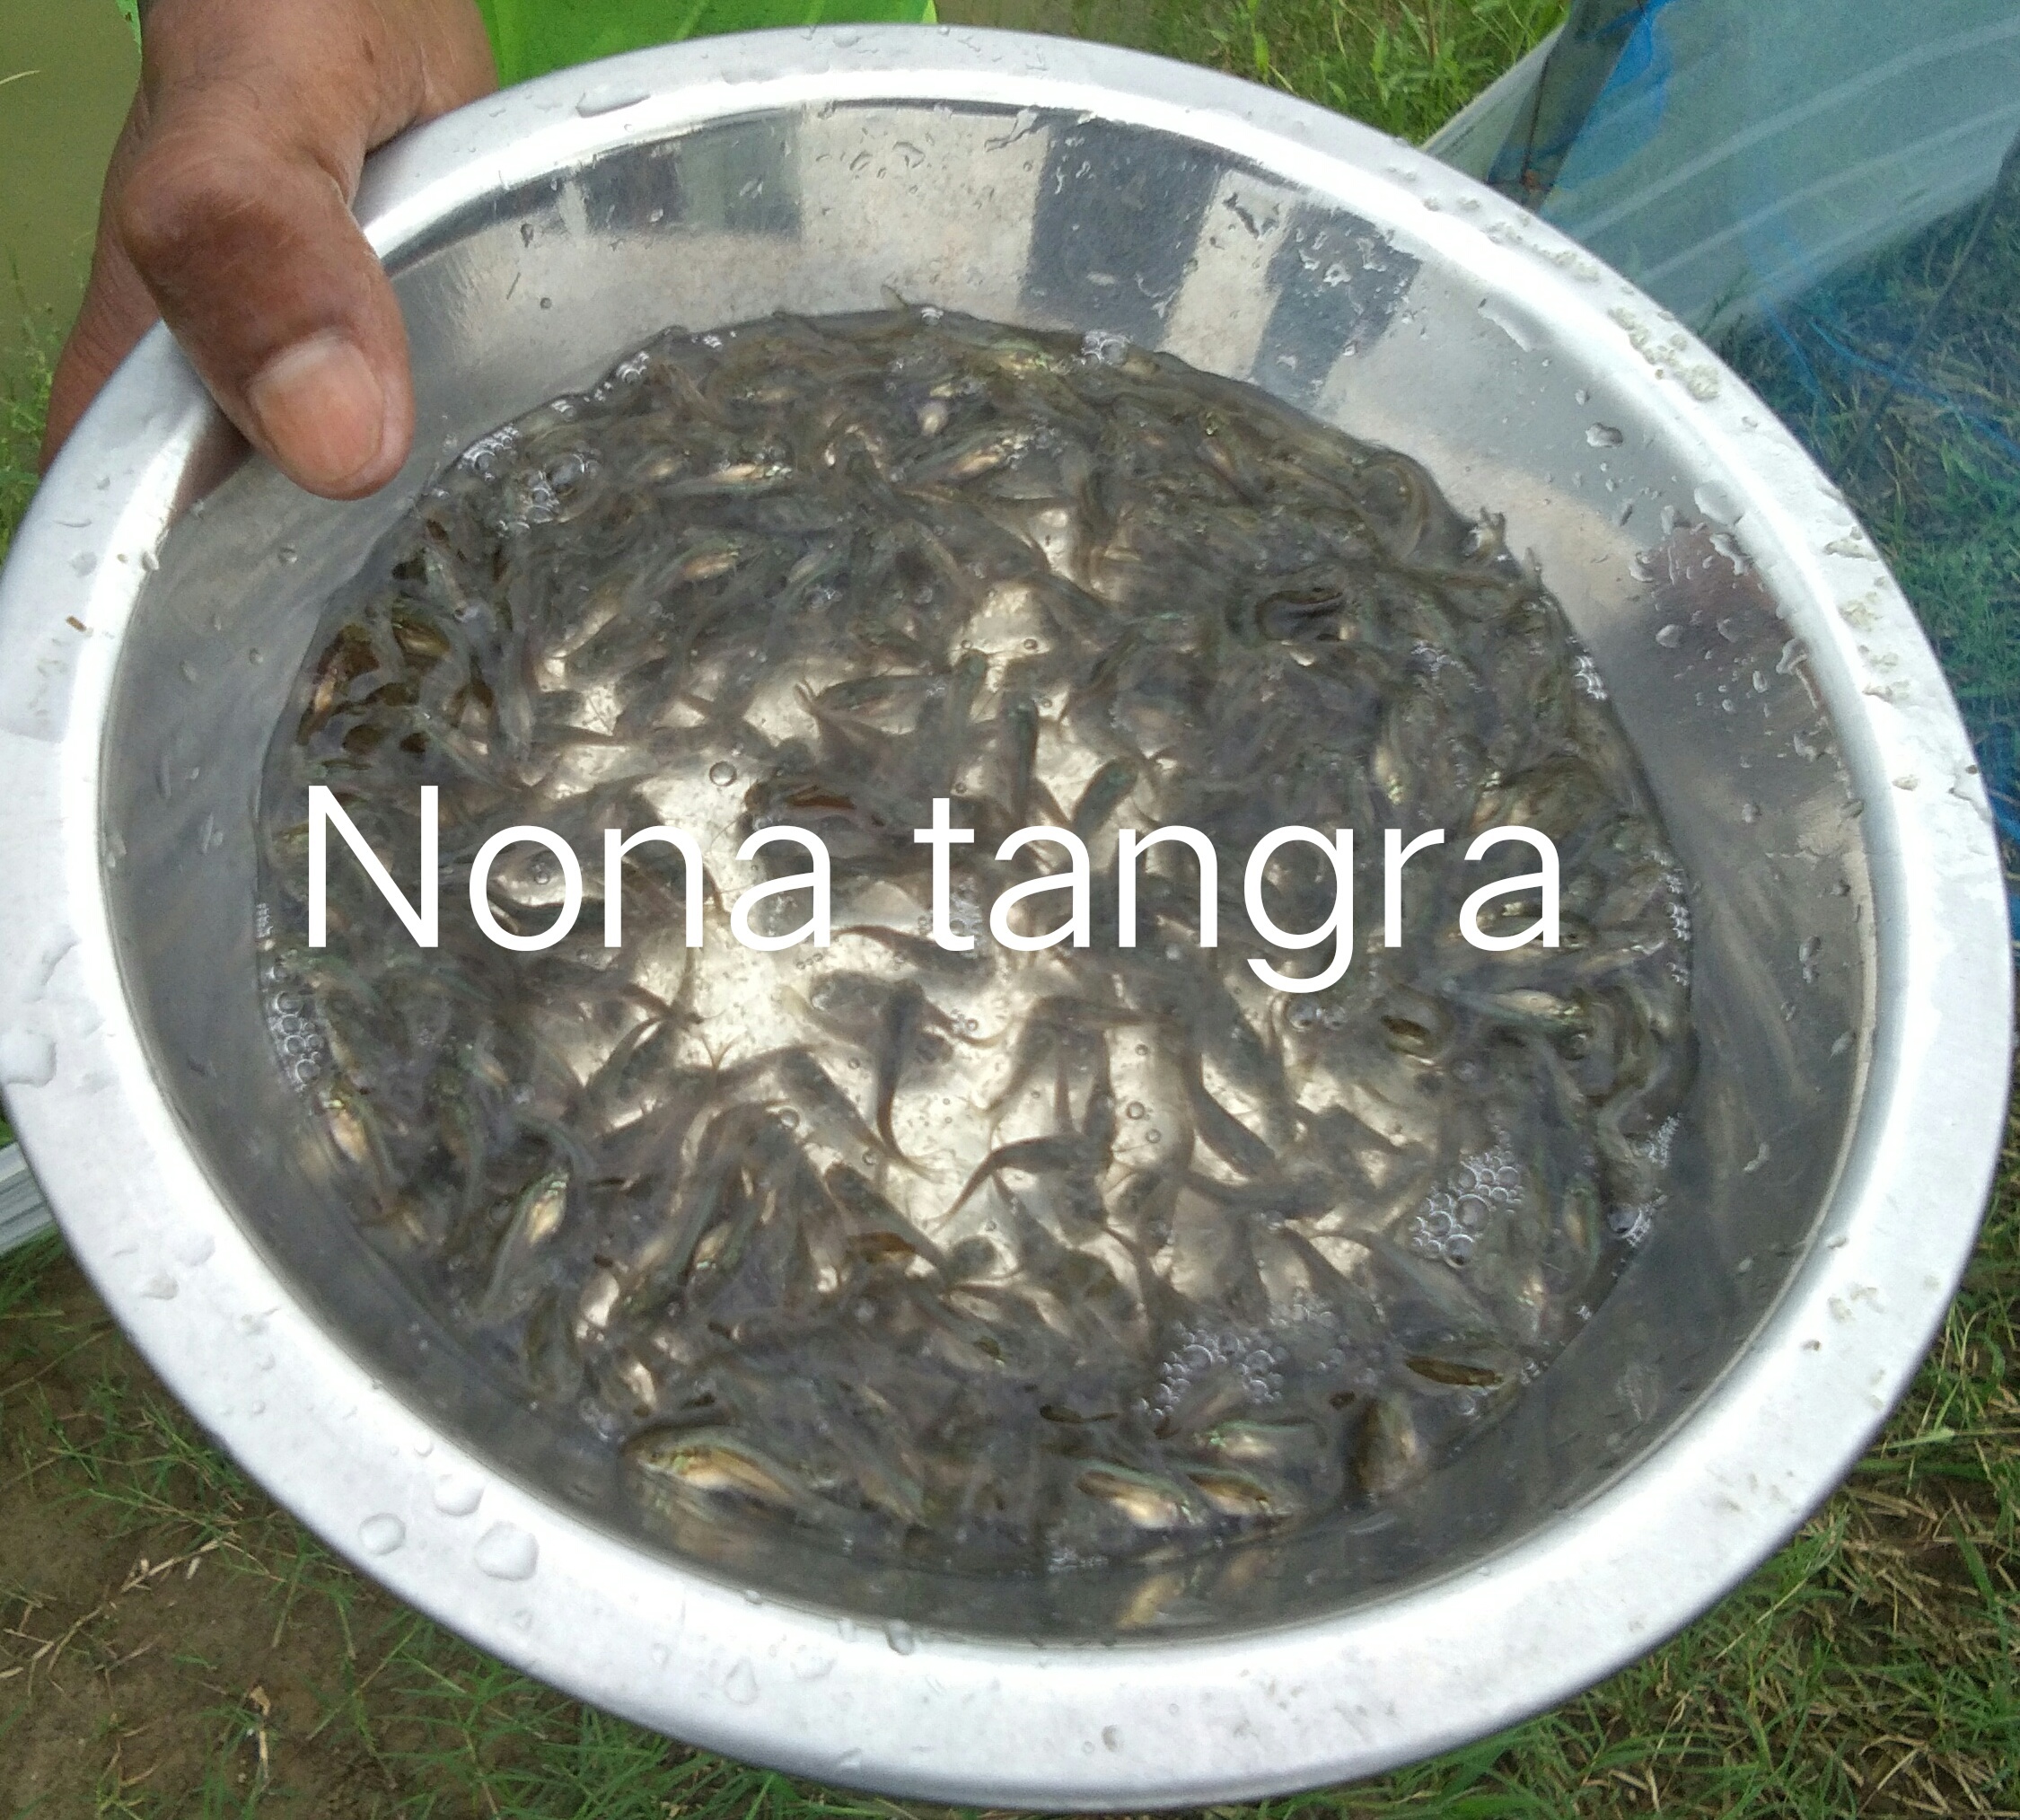 Nona Tangra Fish Seed